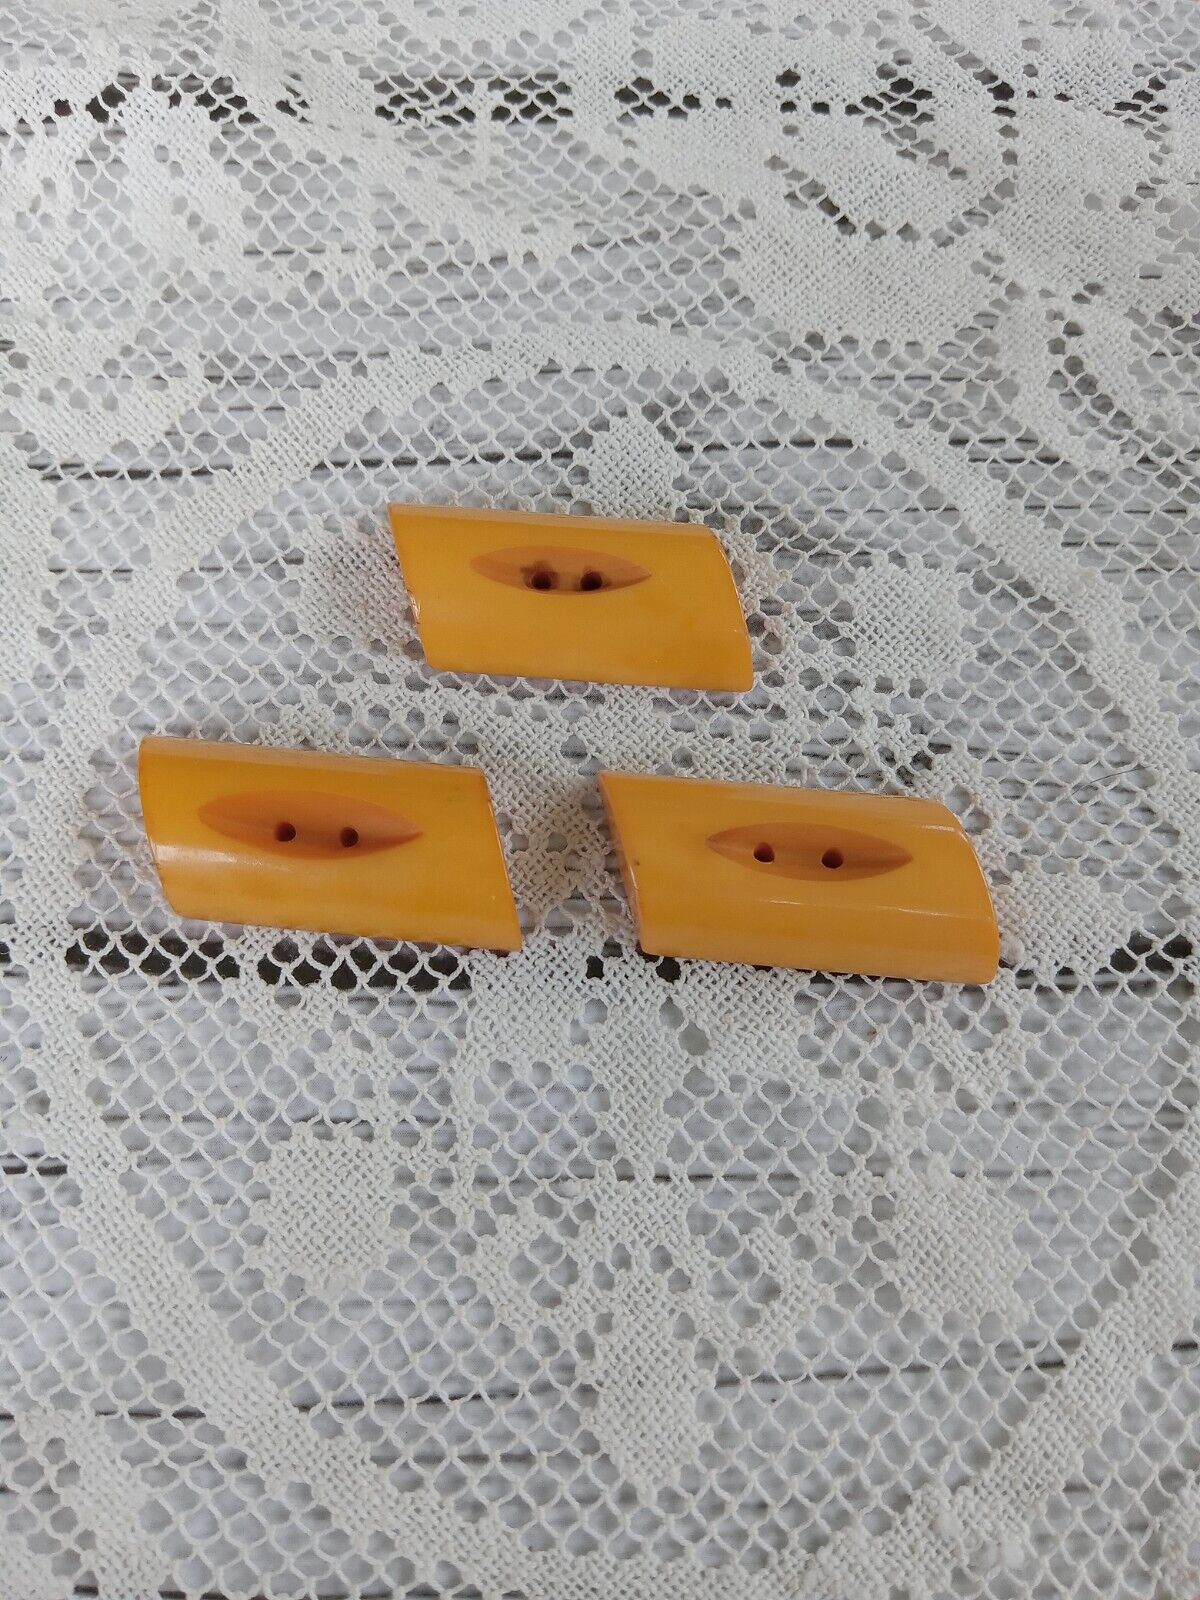 3 Vintage Catalin Bakelite Butterscotch Yellow Diagonal Half Log Buttons